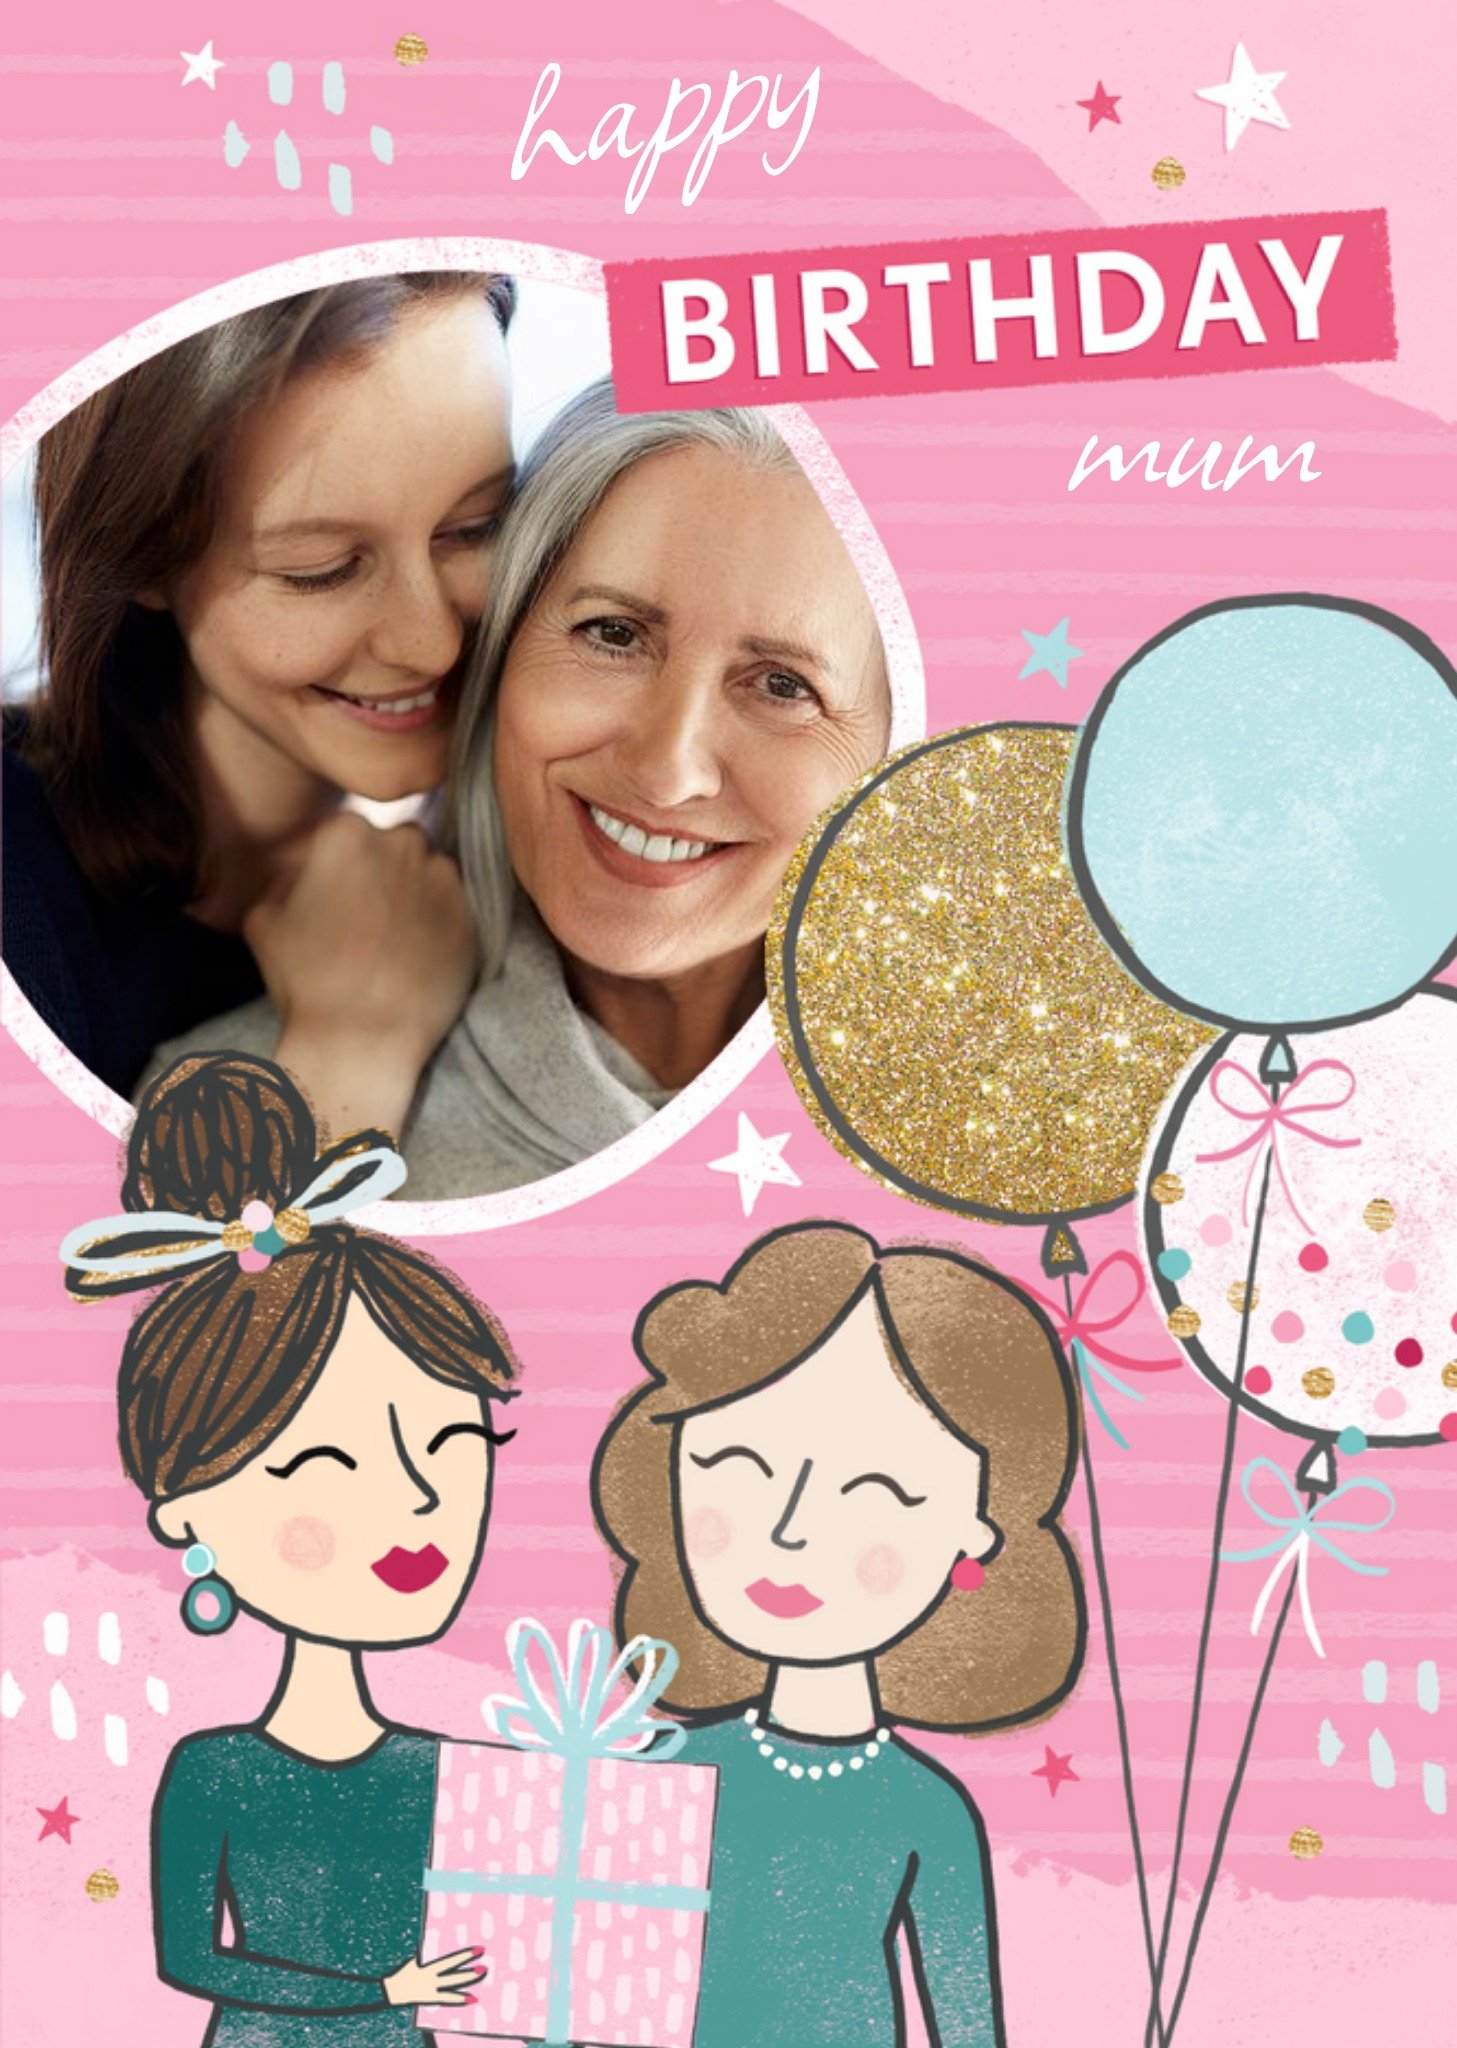 Moonpig Celebration Birthday Ballons Party Themed Mum Photo Upload Birthday Card, Large